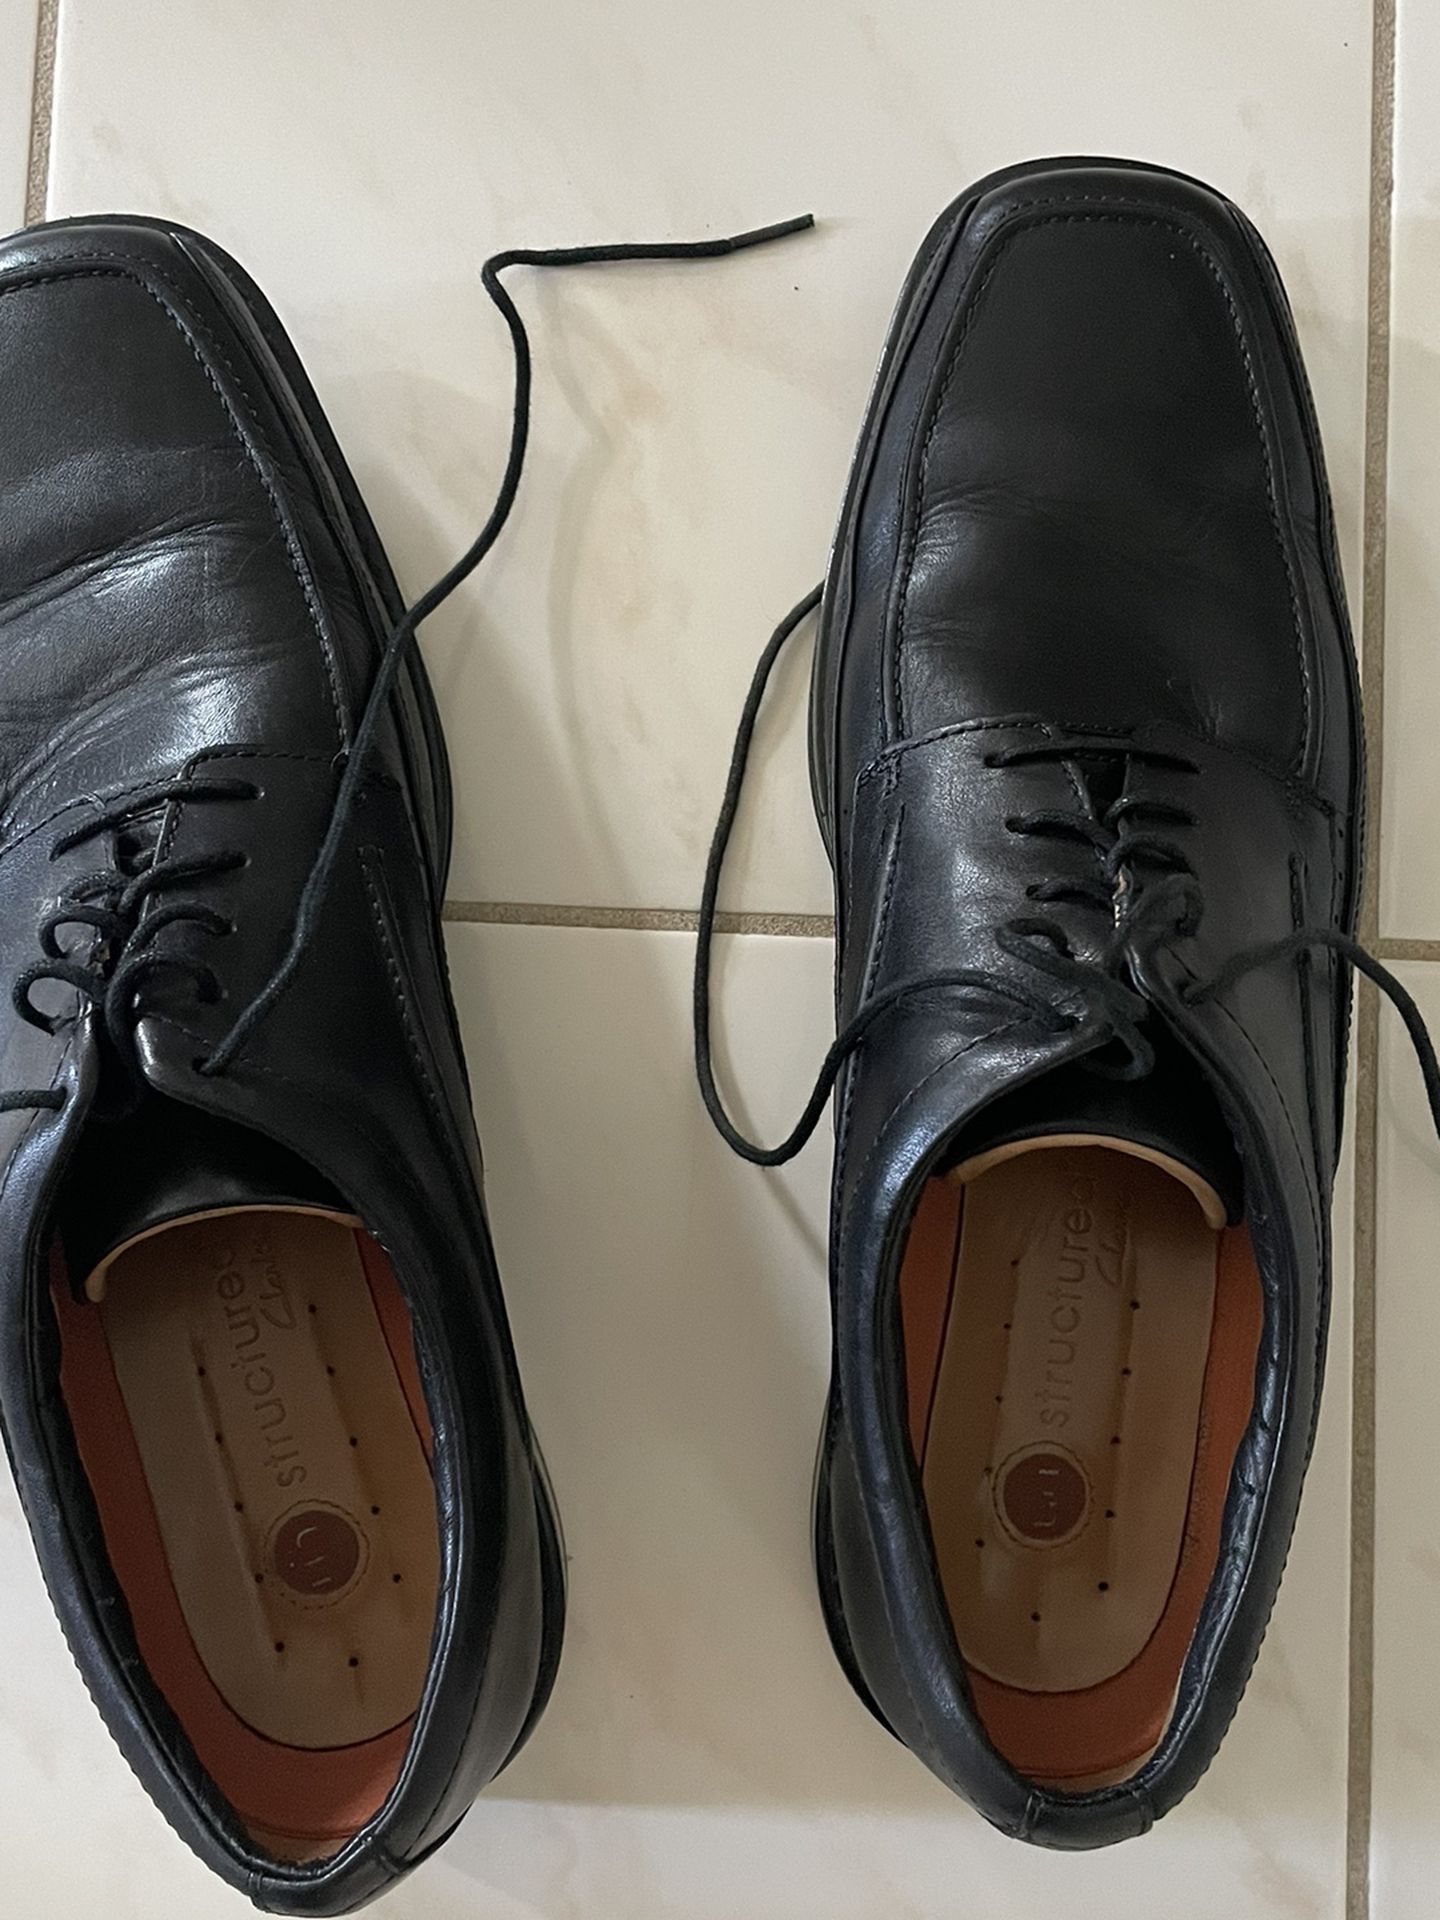 Men’s Clarks Black Leather Tie Dress Shoe